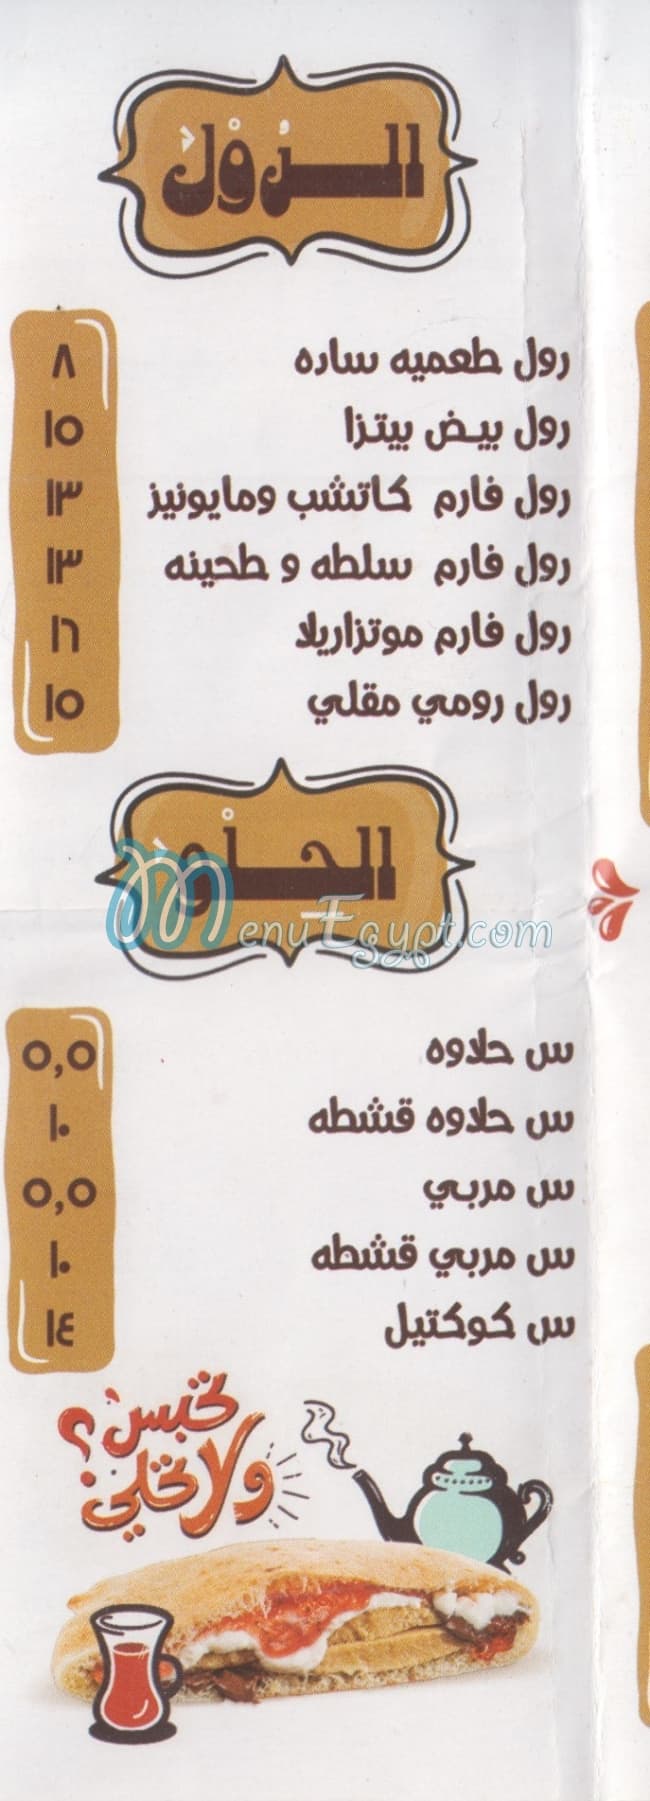 El Shekh Gamal delivery menu